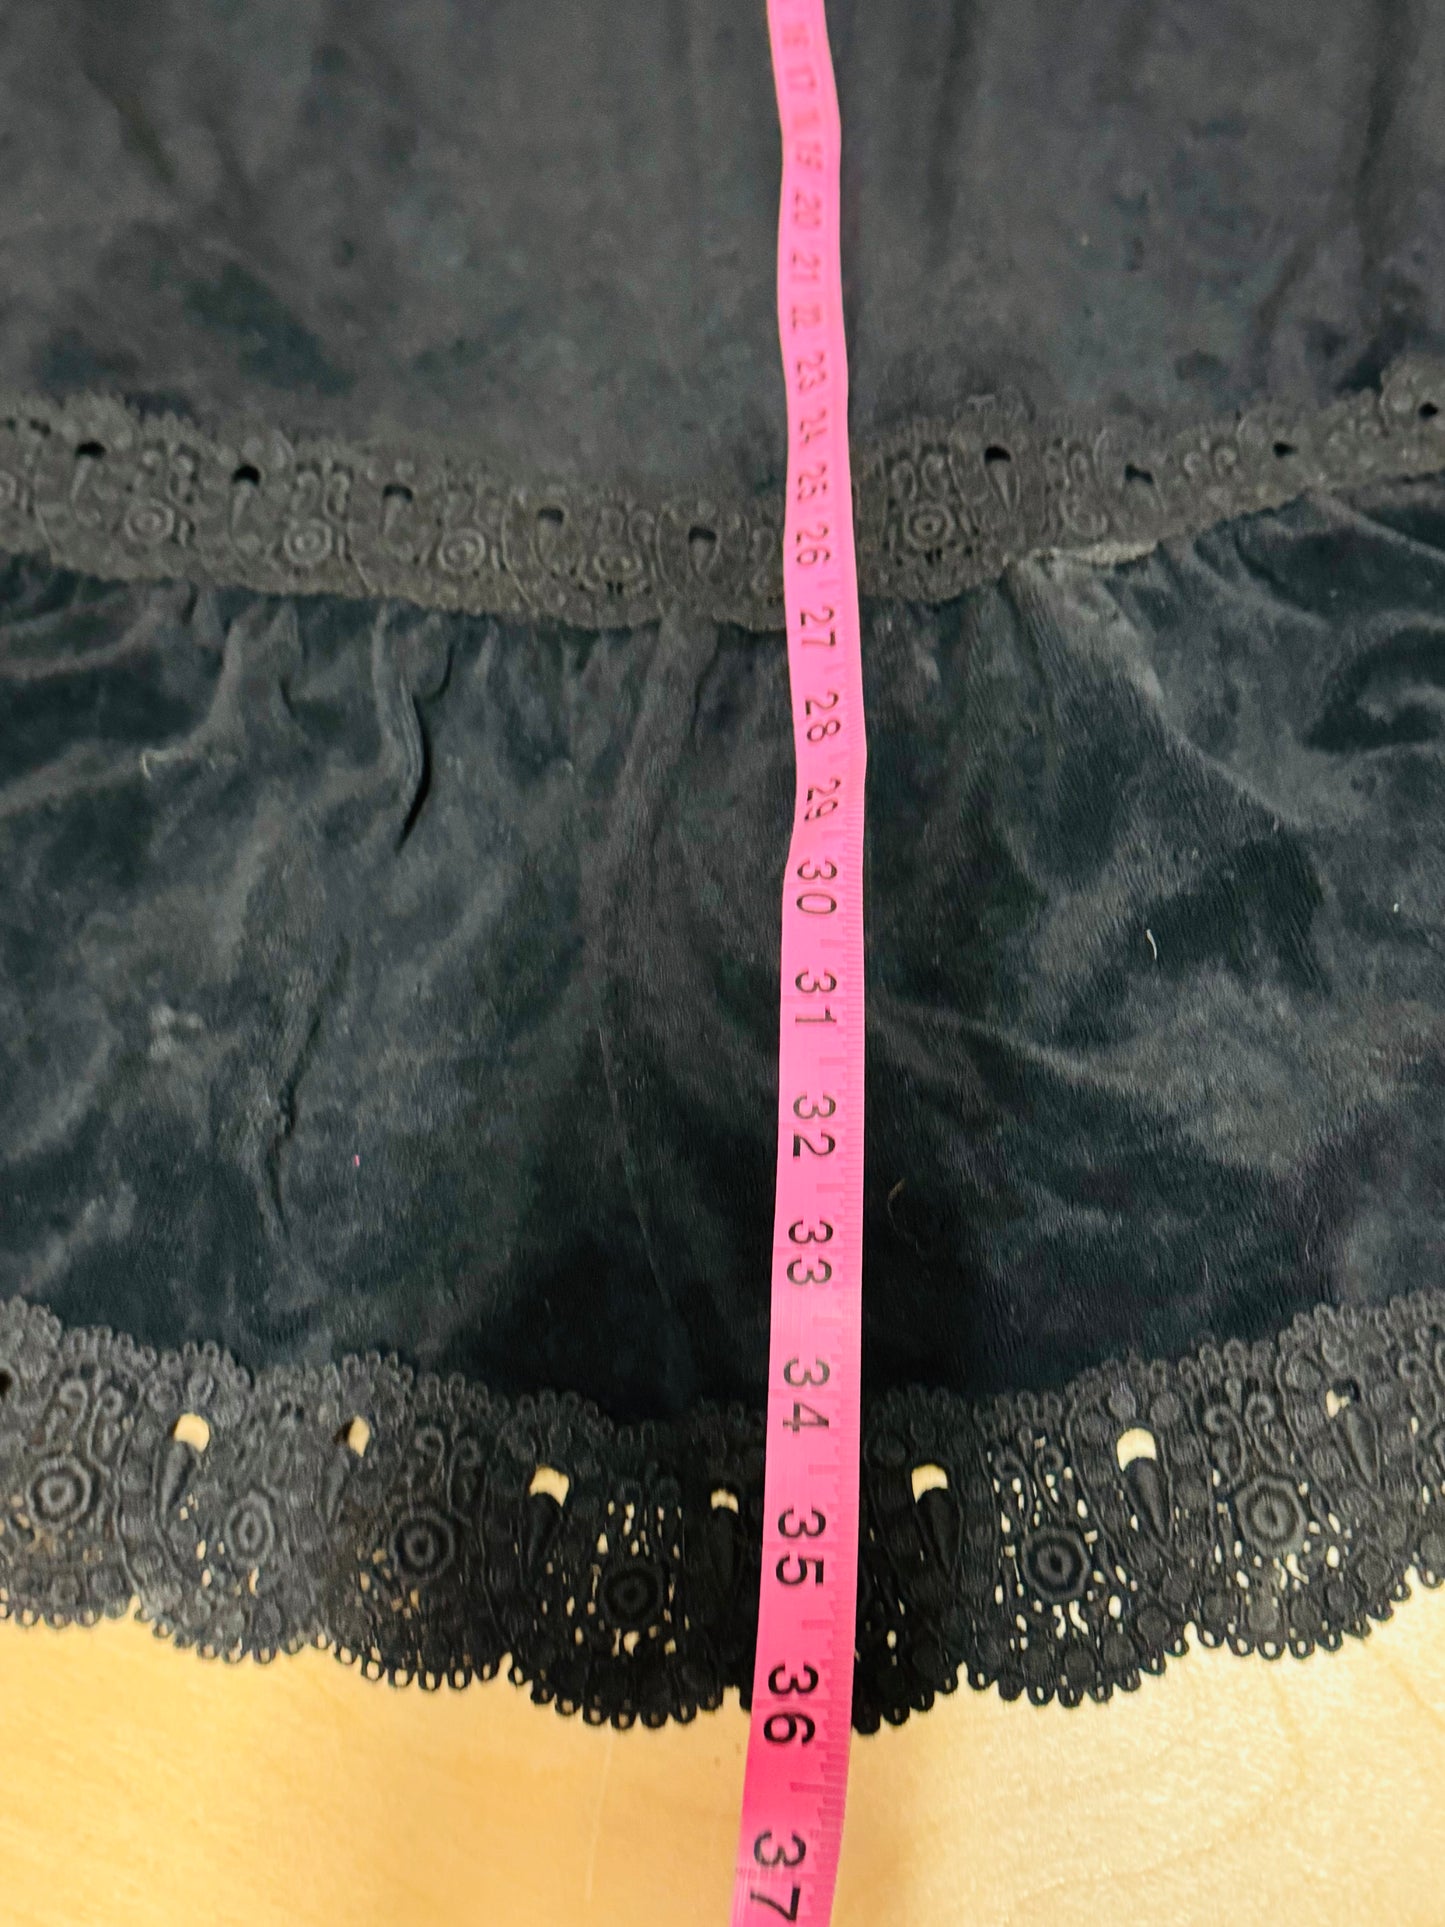 Juicy Couture Y2K Sleeveless Women’s Velvet Dress Black - Size XL